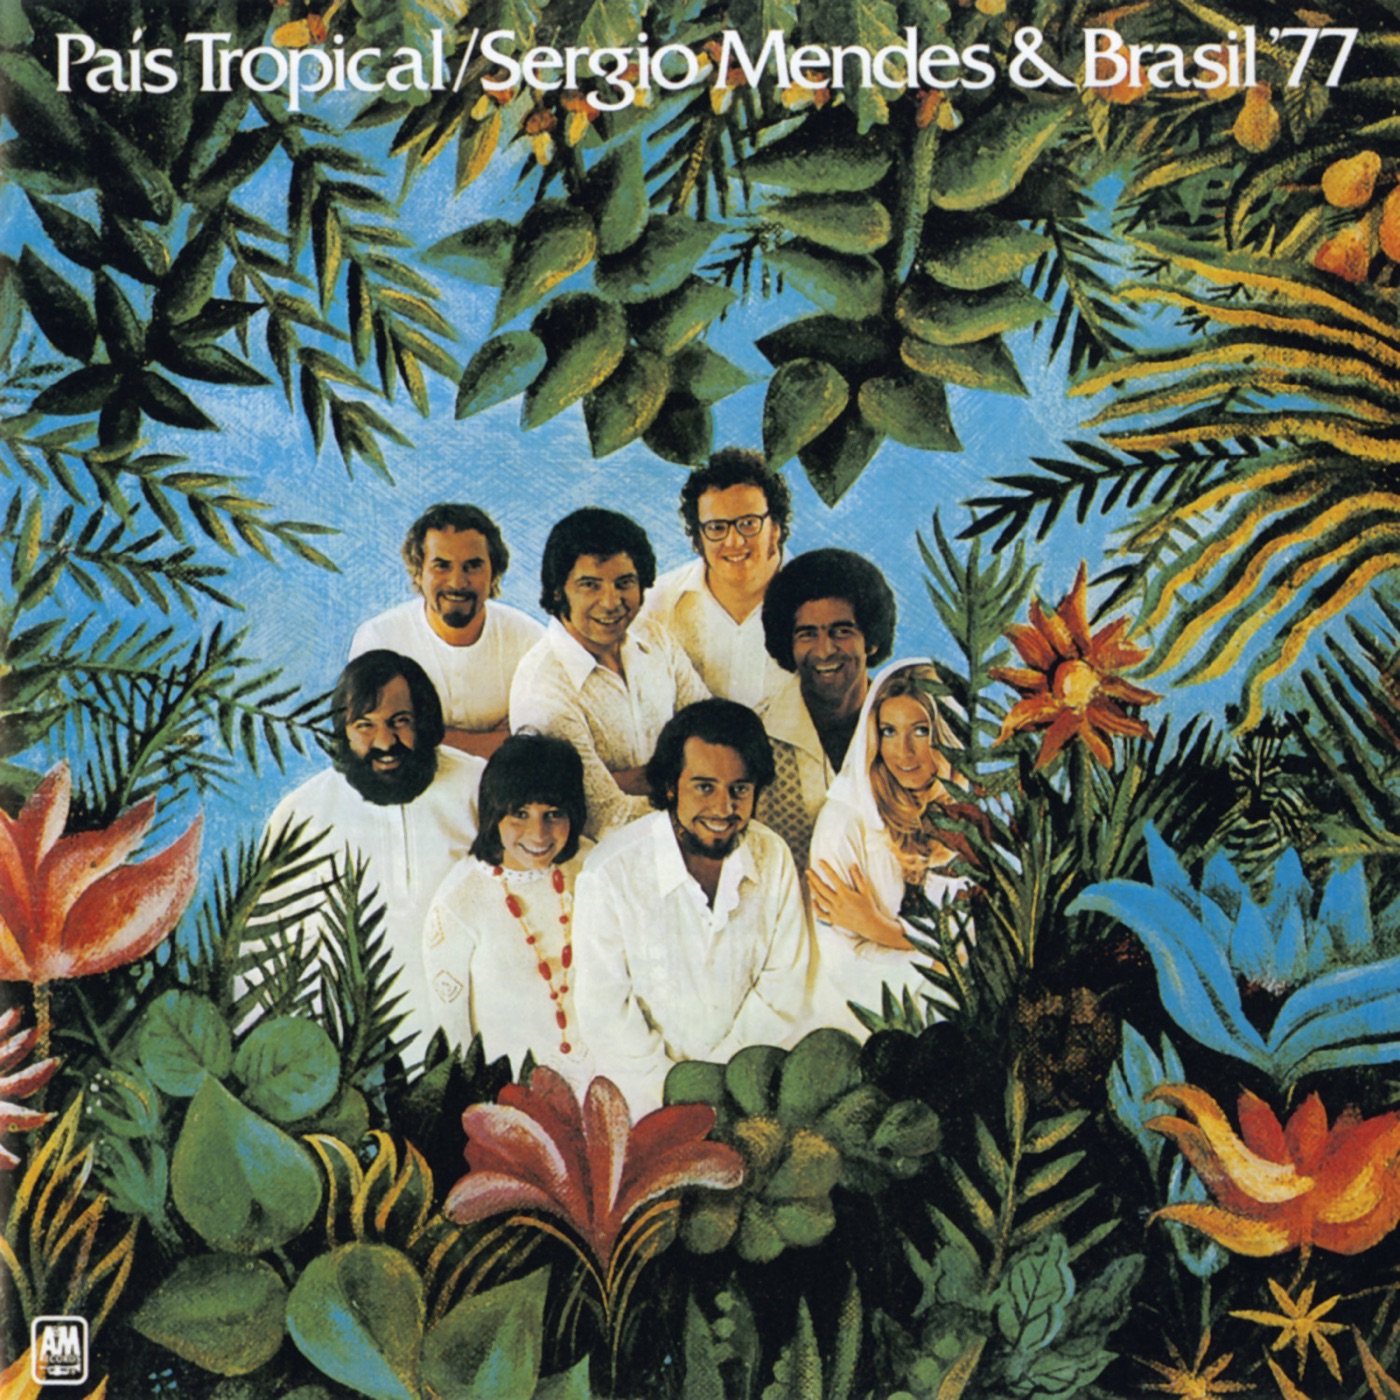 País Tropical by Sergio Mendes & Brasil '77